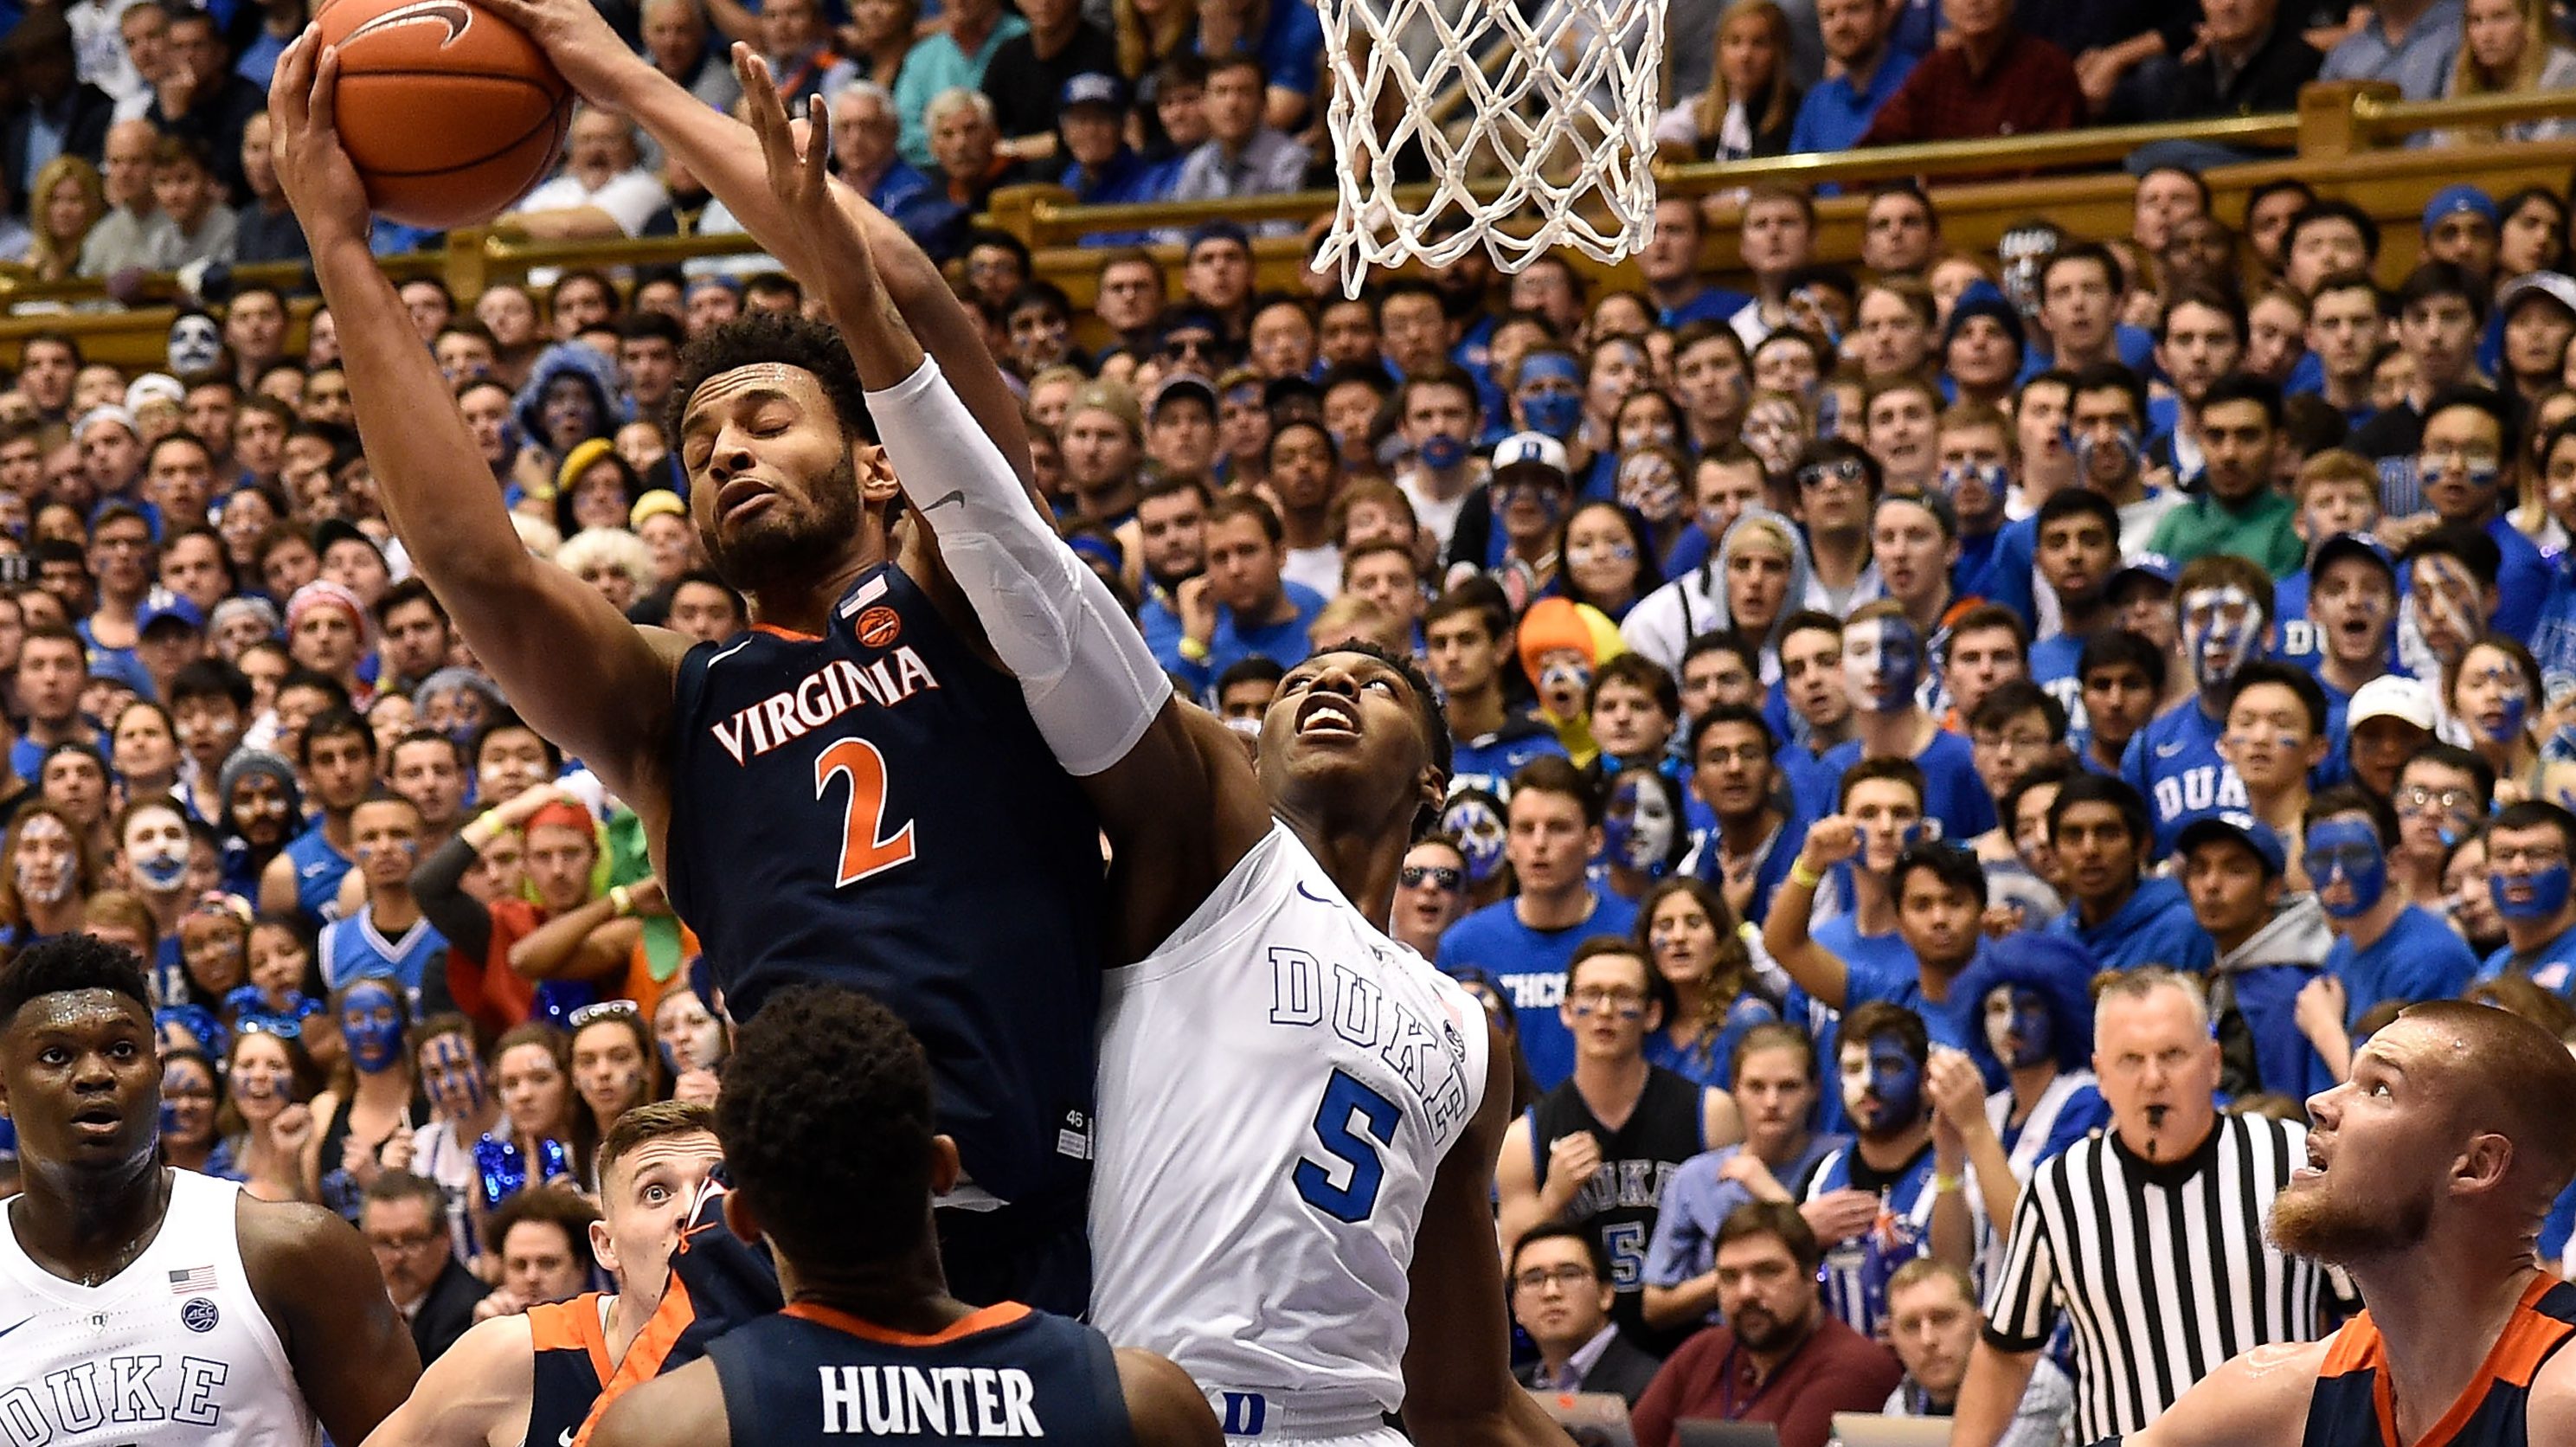 How to Watch Duke vs Virginia Basketball Online